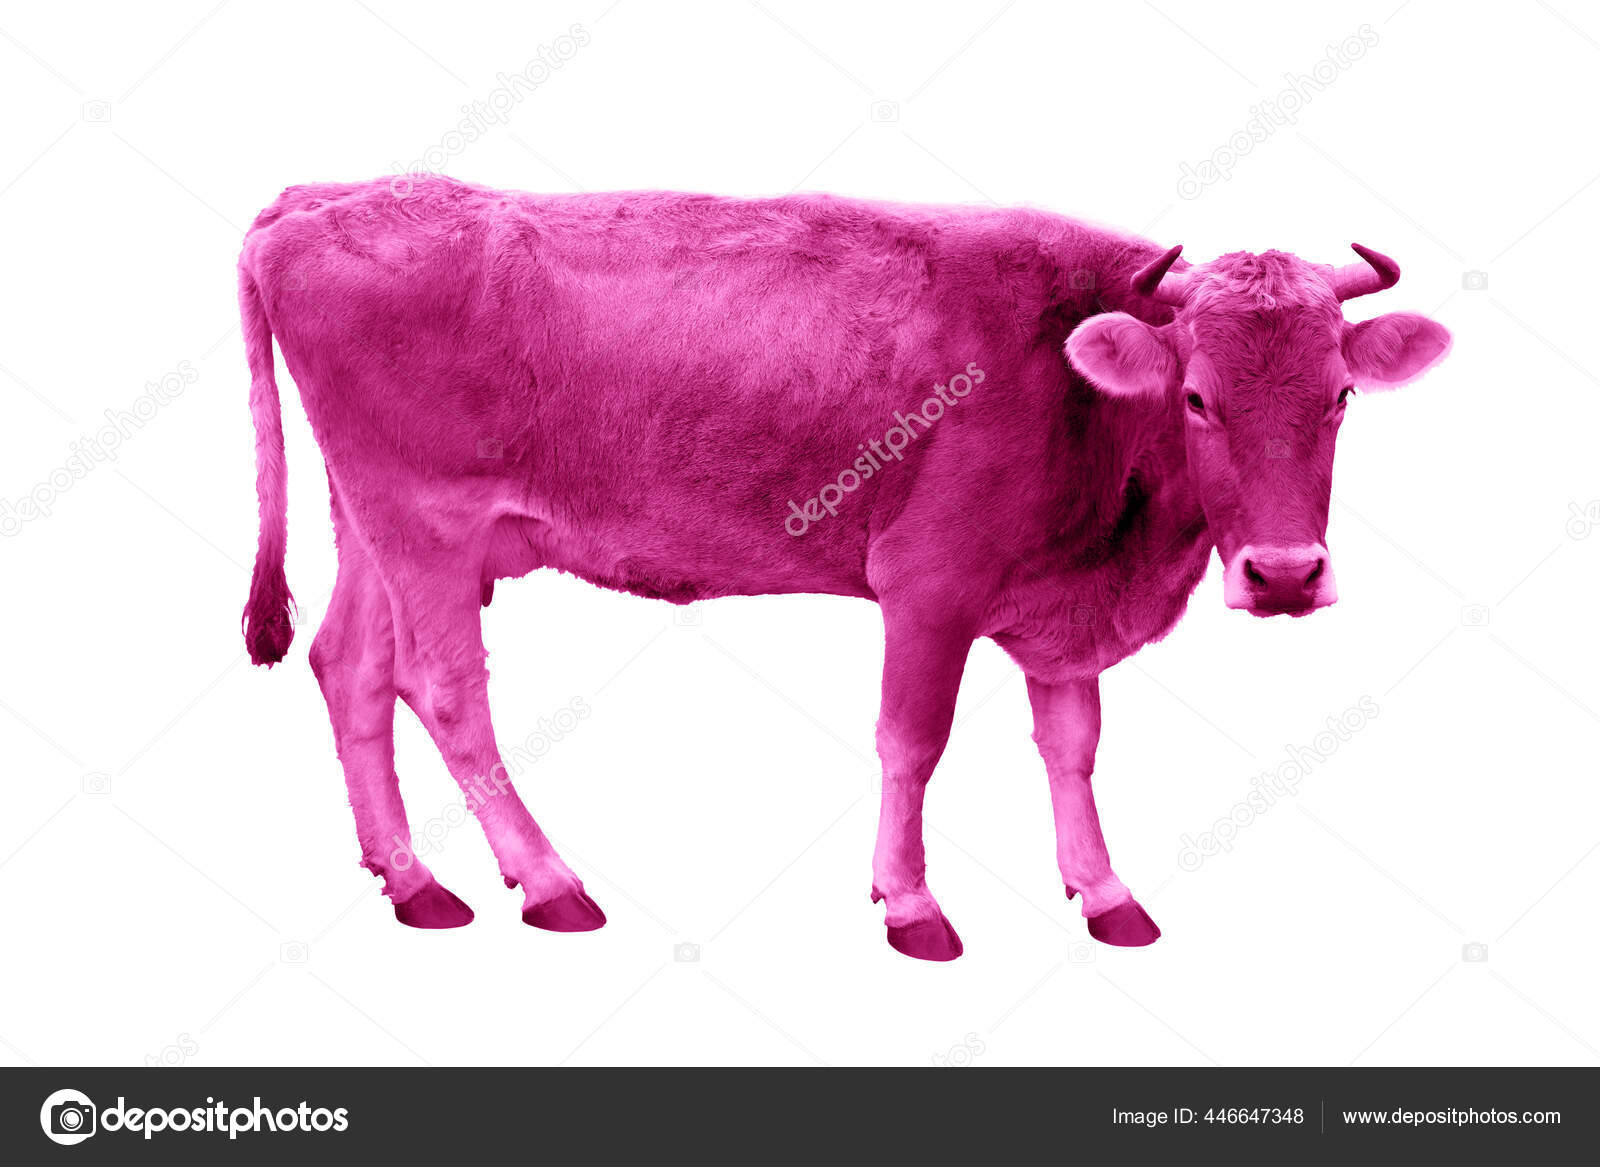 https://st2.depositphotos.com/27201292/44664/i/1600/depositphotos_446647348-stock-photo-pink-cow-isolated-white-background.jpg